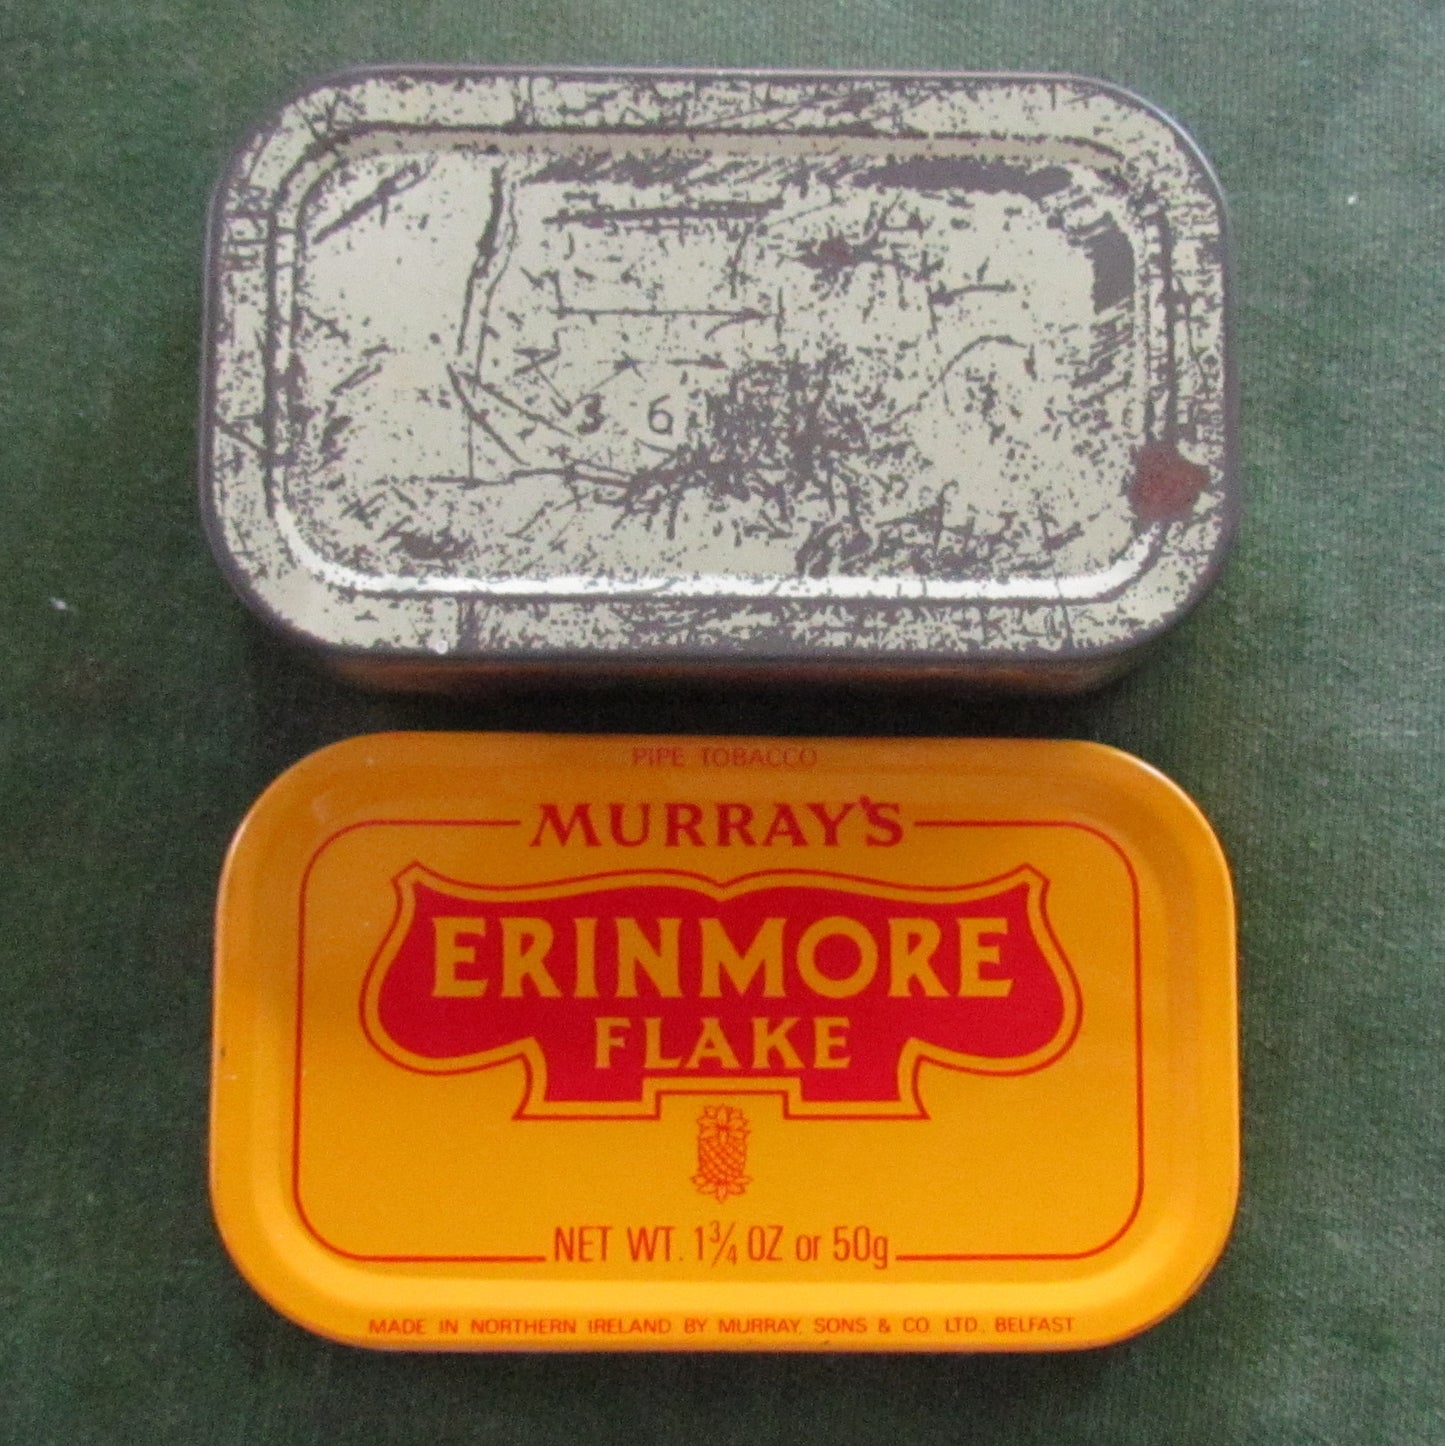 Murrays Erinmore Flake Pipe Tobaccoo Tin